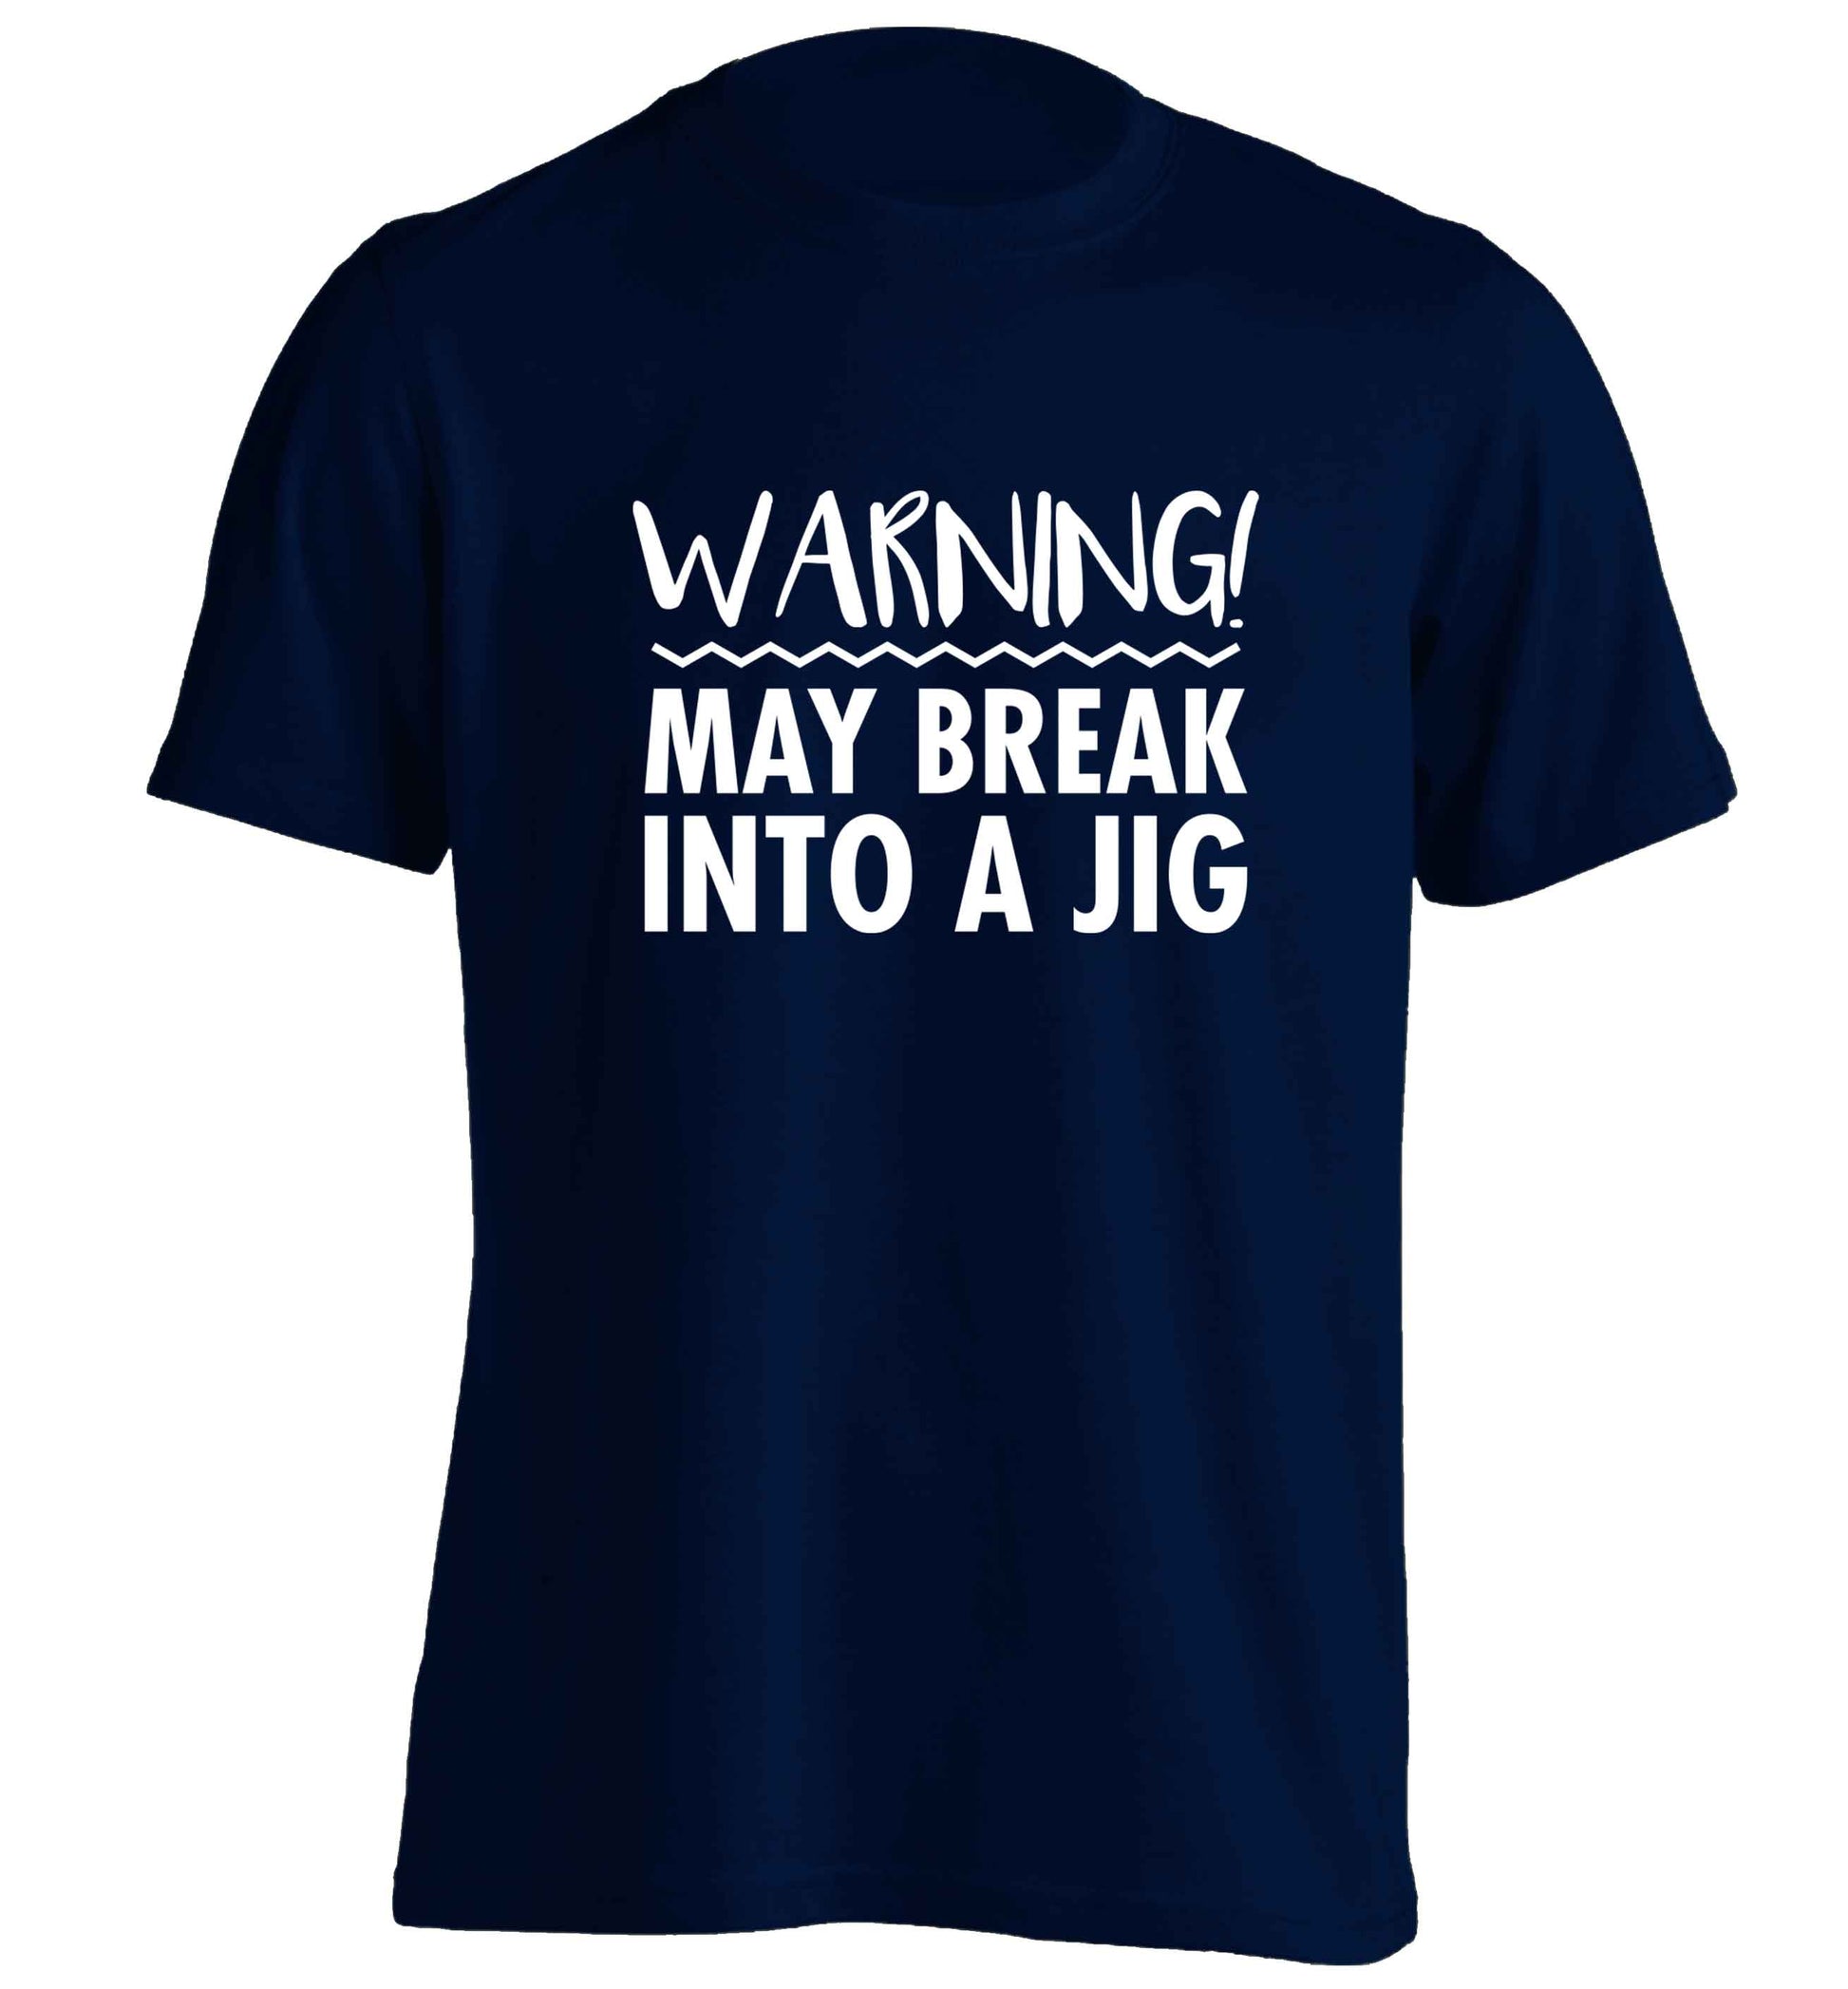 Warning may break into a jig adults unisex navy Tshirt 2XL